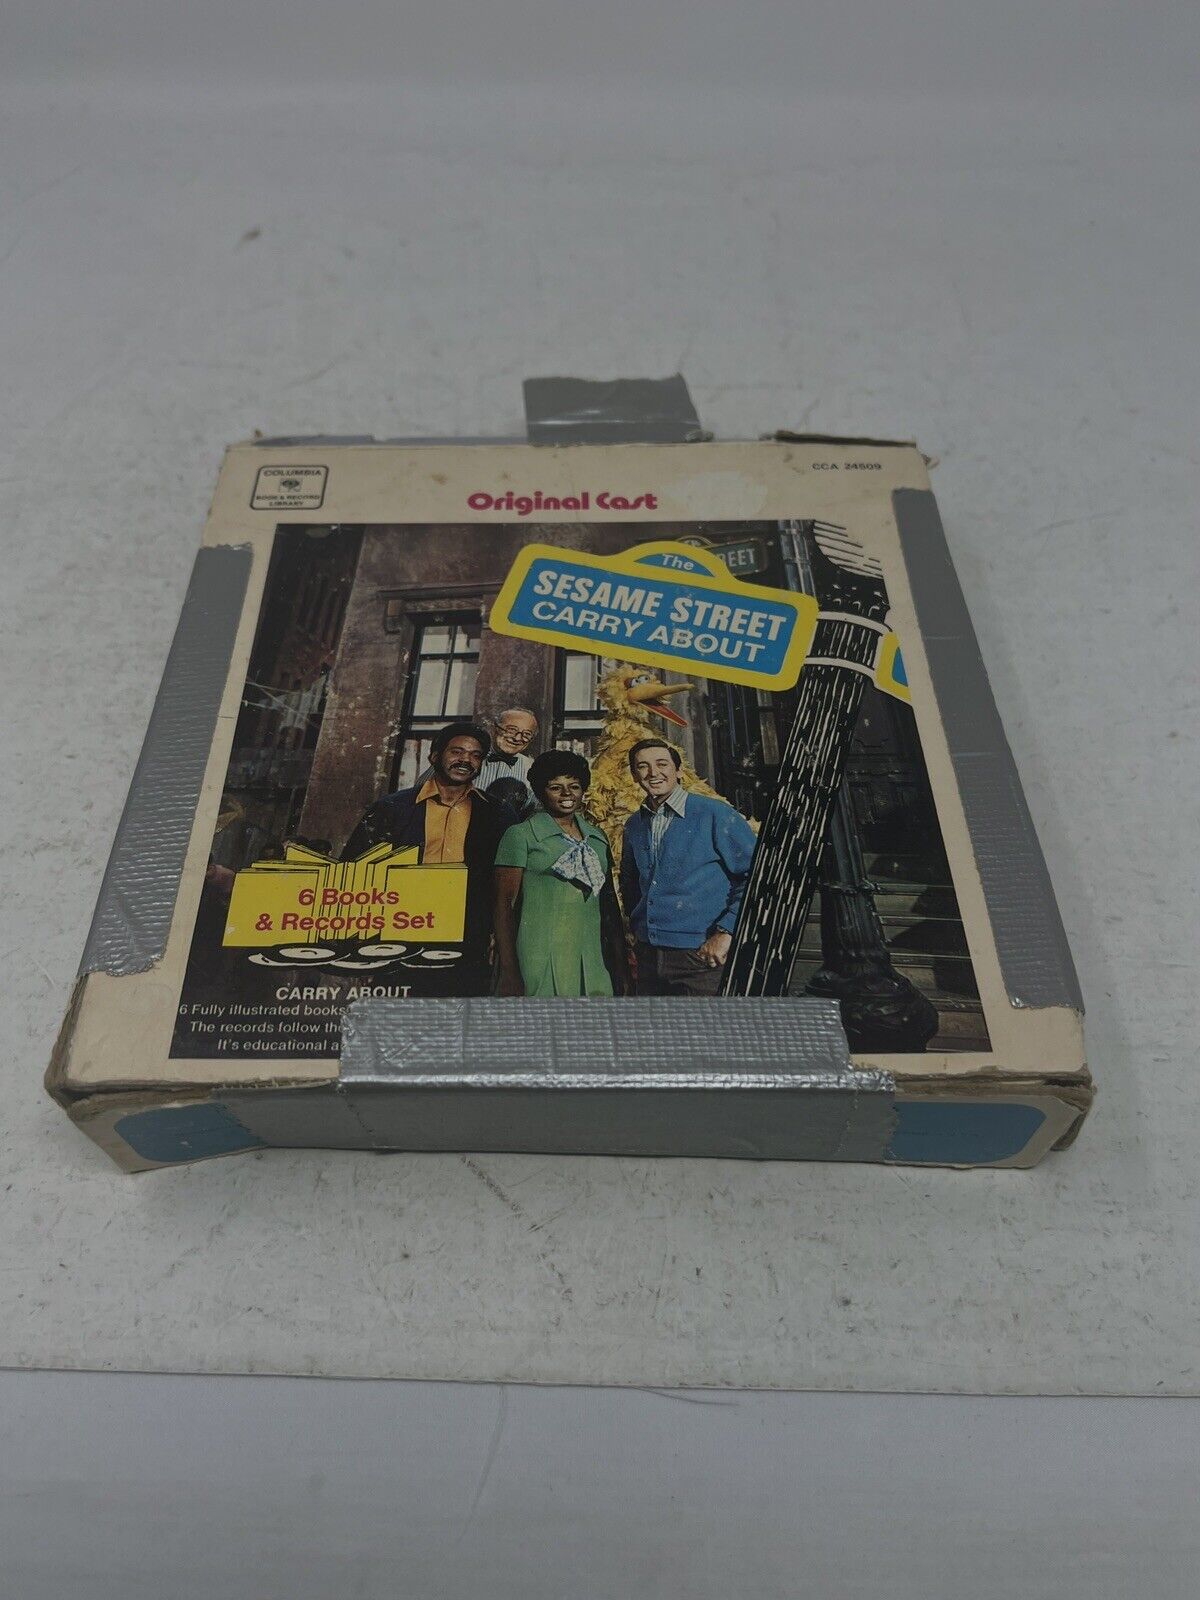 Vintage 1970 Sesame Street Original Cast Carry About 6 Books Records Set 45 RPM